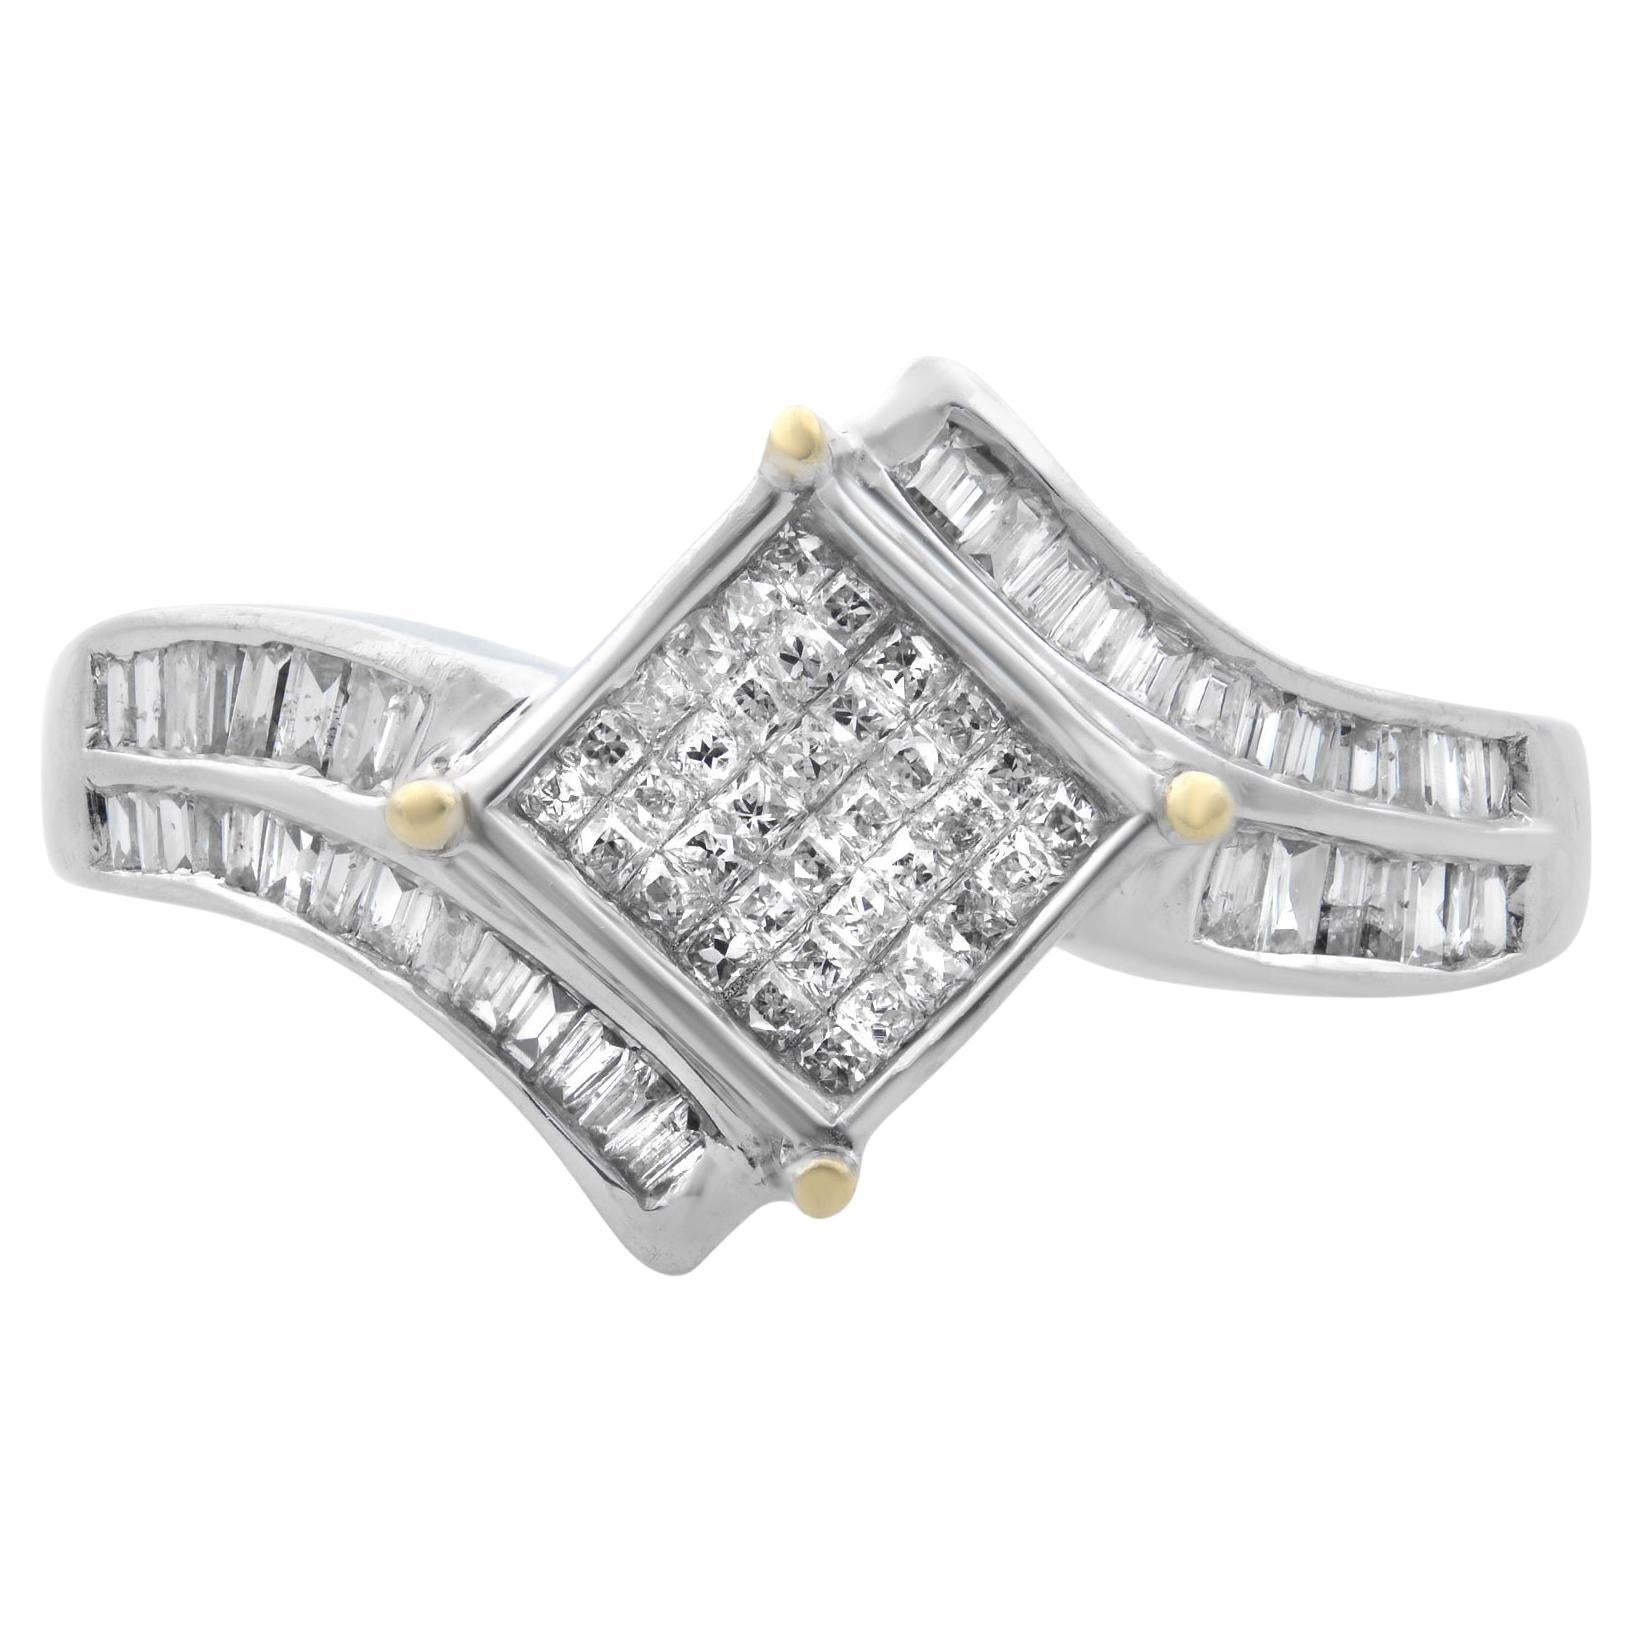 Rachel Koen 0.50Cttw Baguette Cut Diamond Ladies Ring 14K White Gold